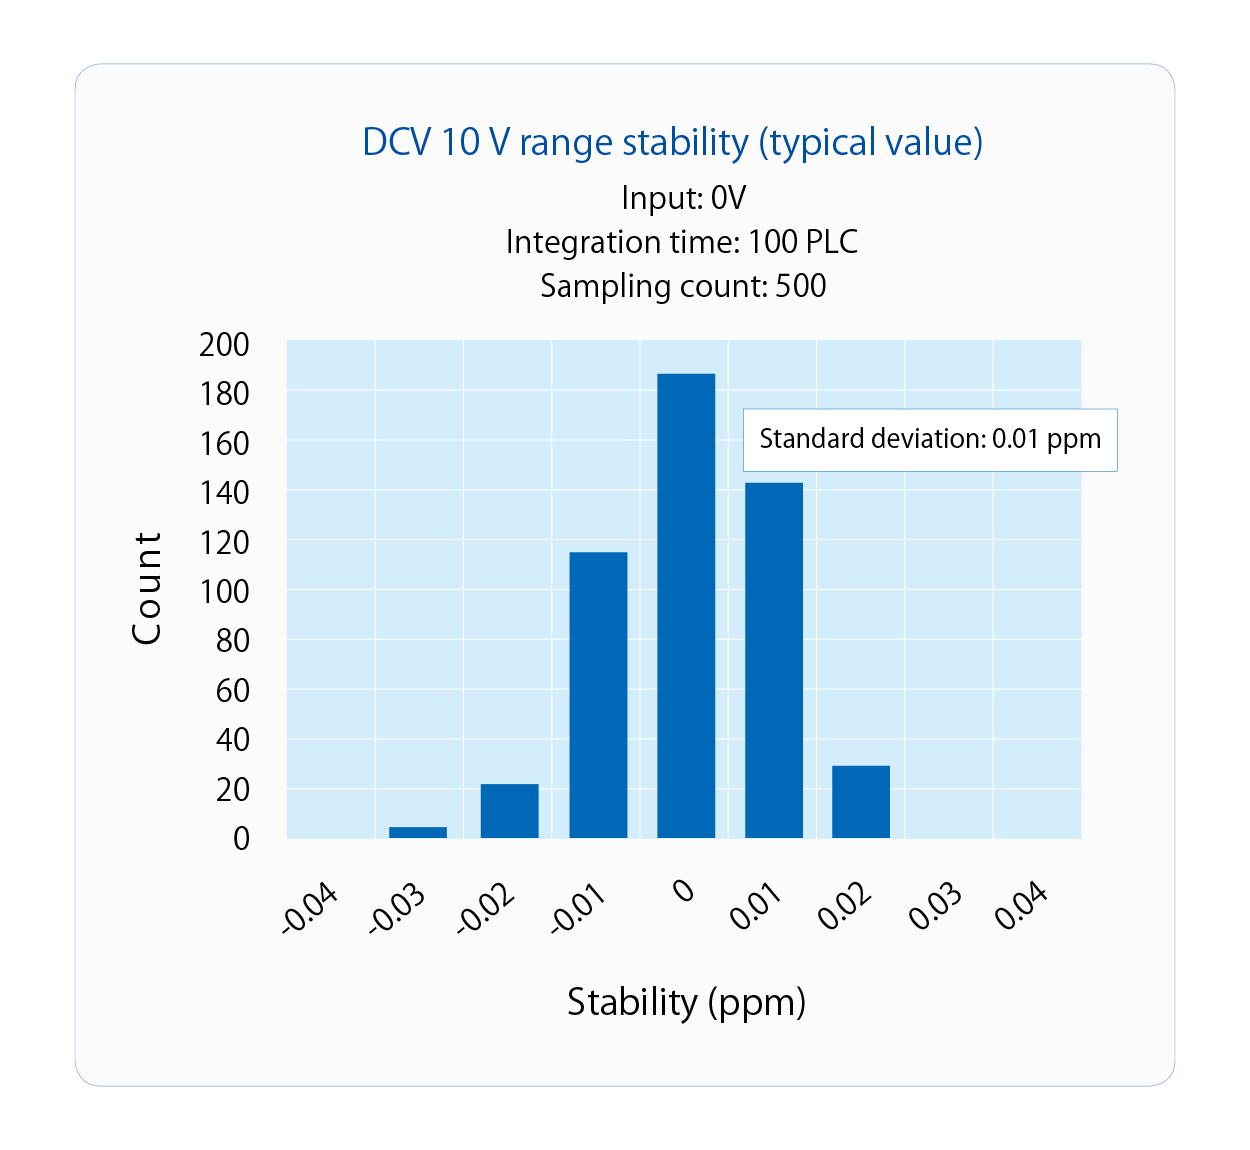 DCV 10 V range stability (typical value)